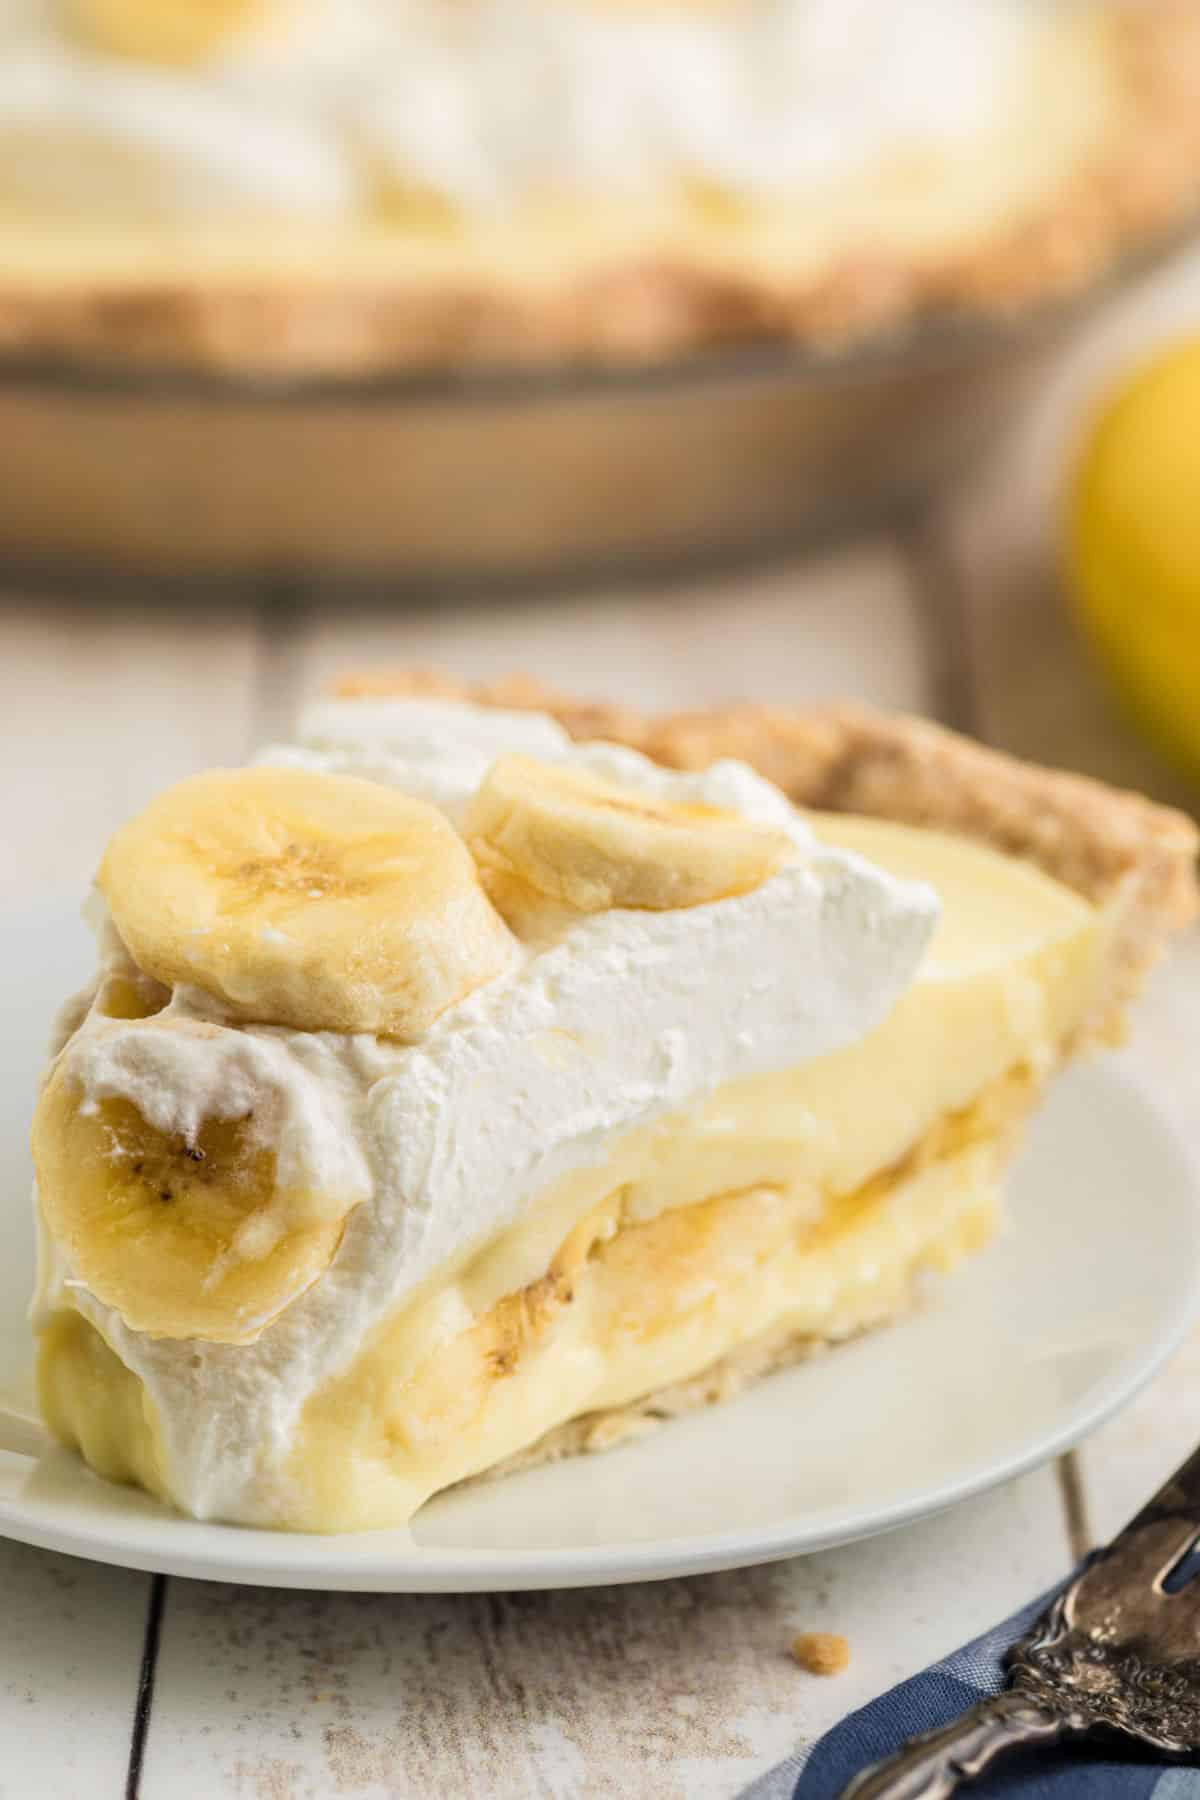 A slice of banana cream pie, with sliced bananas on top.